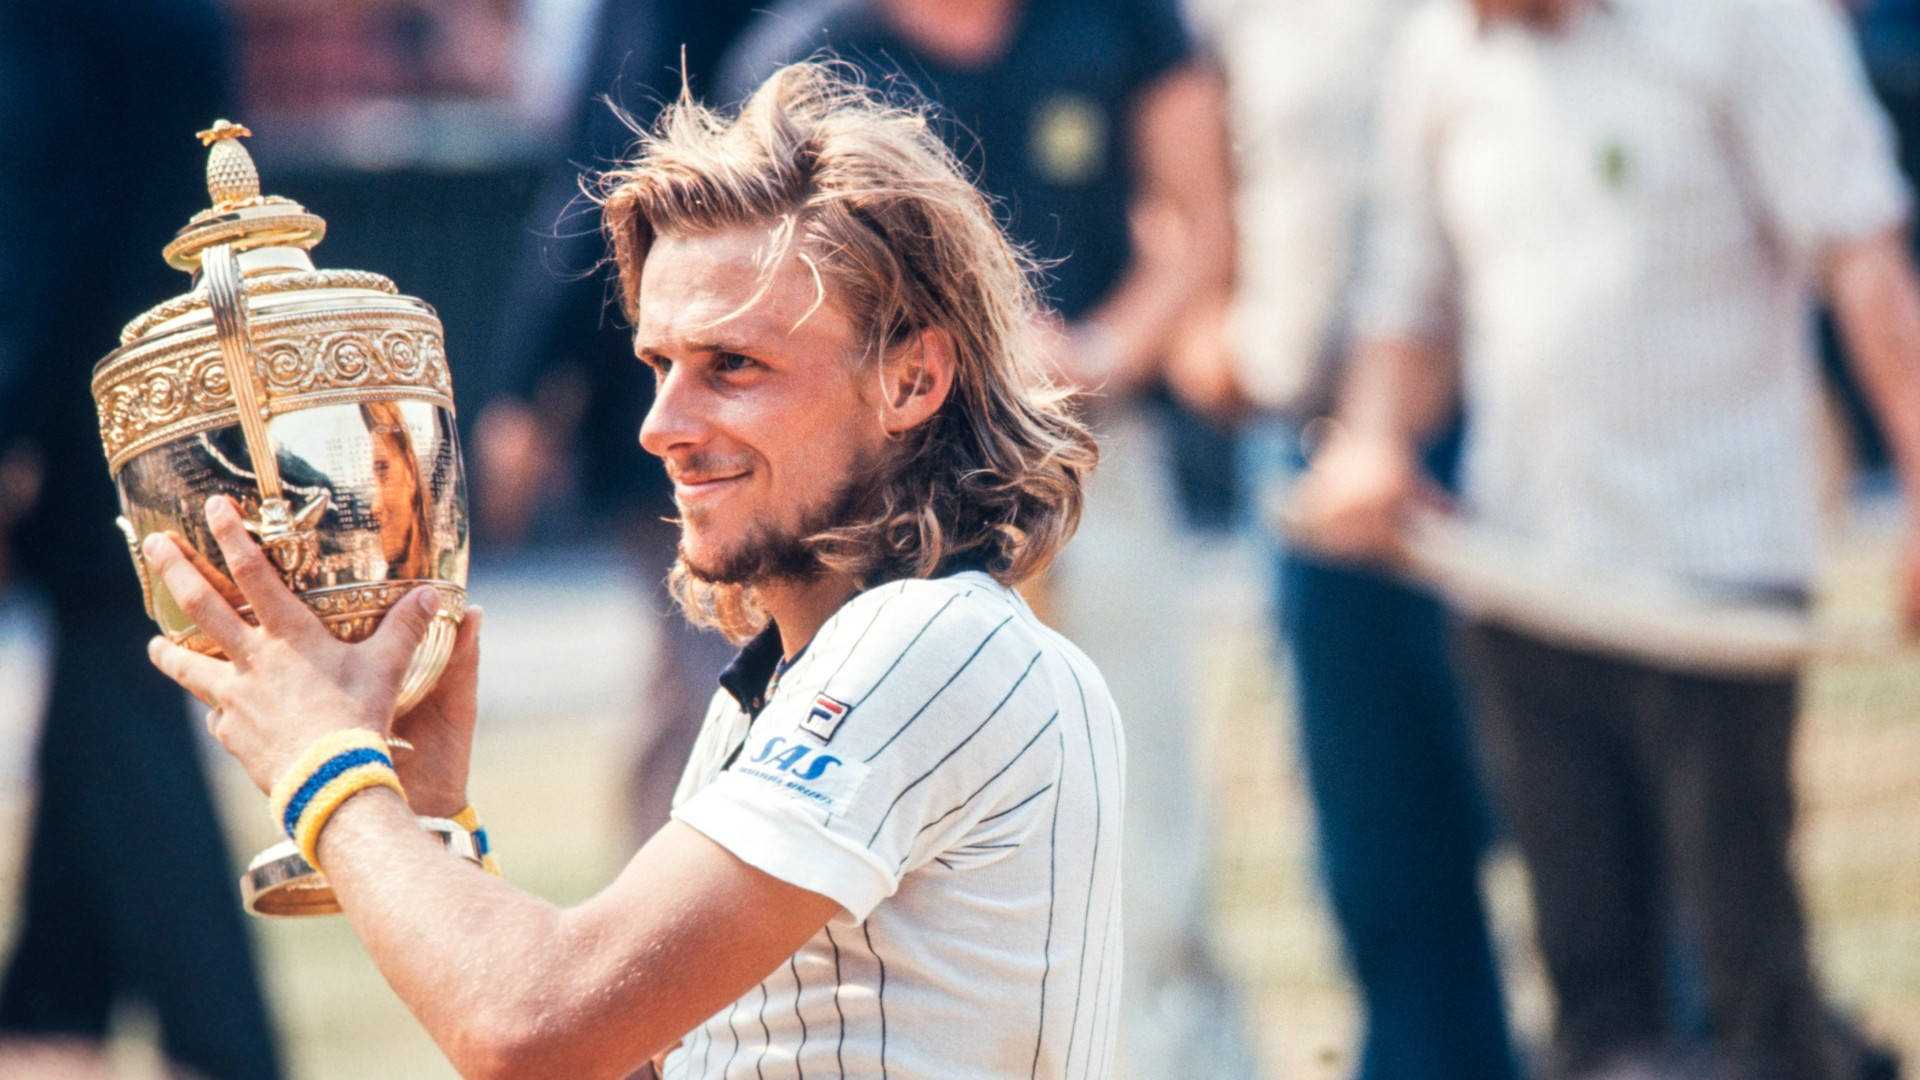 Campeóndel Campeonato De Tenis De Césped De Wimbledon 1976, Björn Borg. Fondo de pantalla